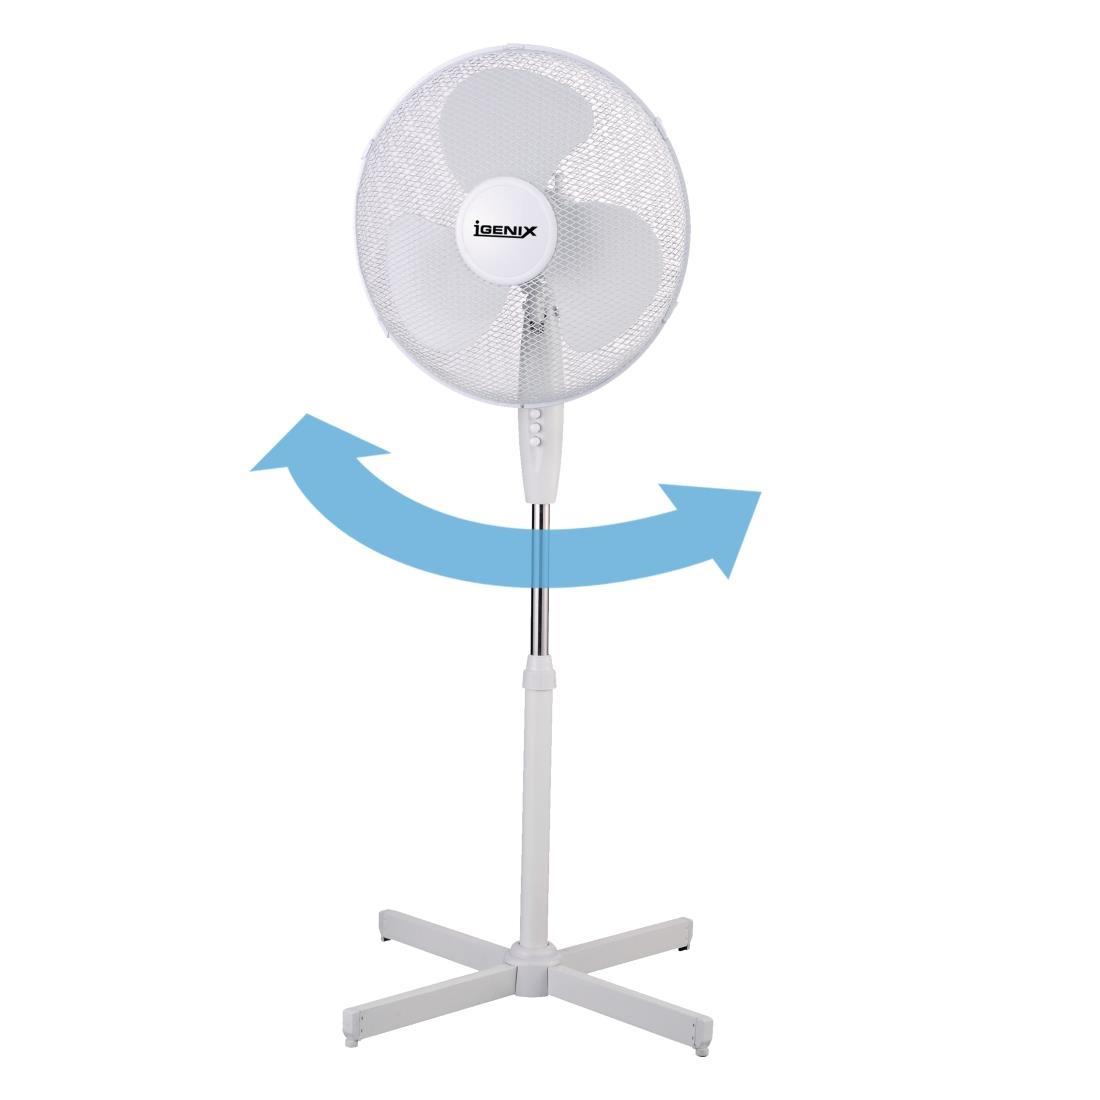 Igenix 16" Oscillating White Stand Fan - GR389  - 4